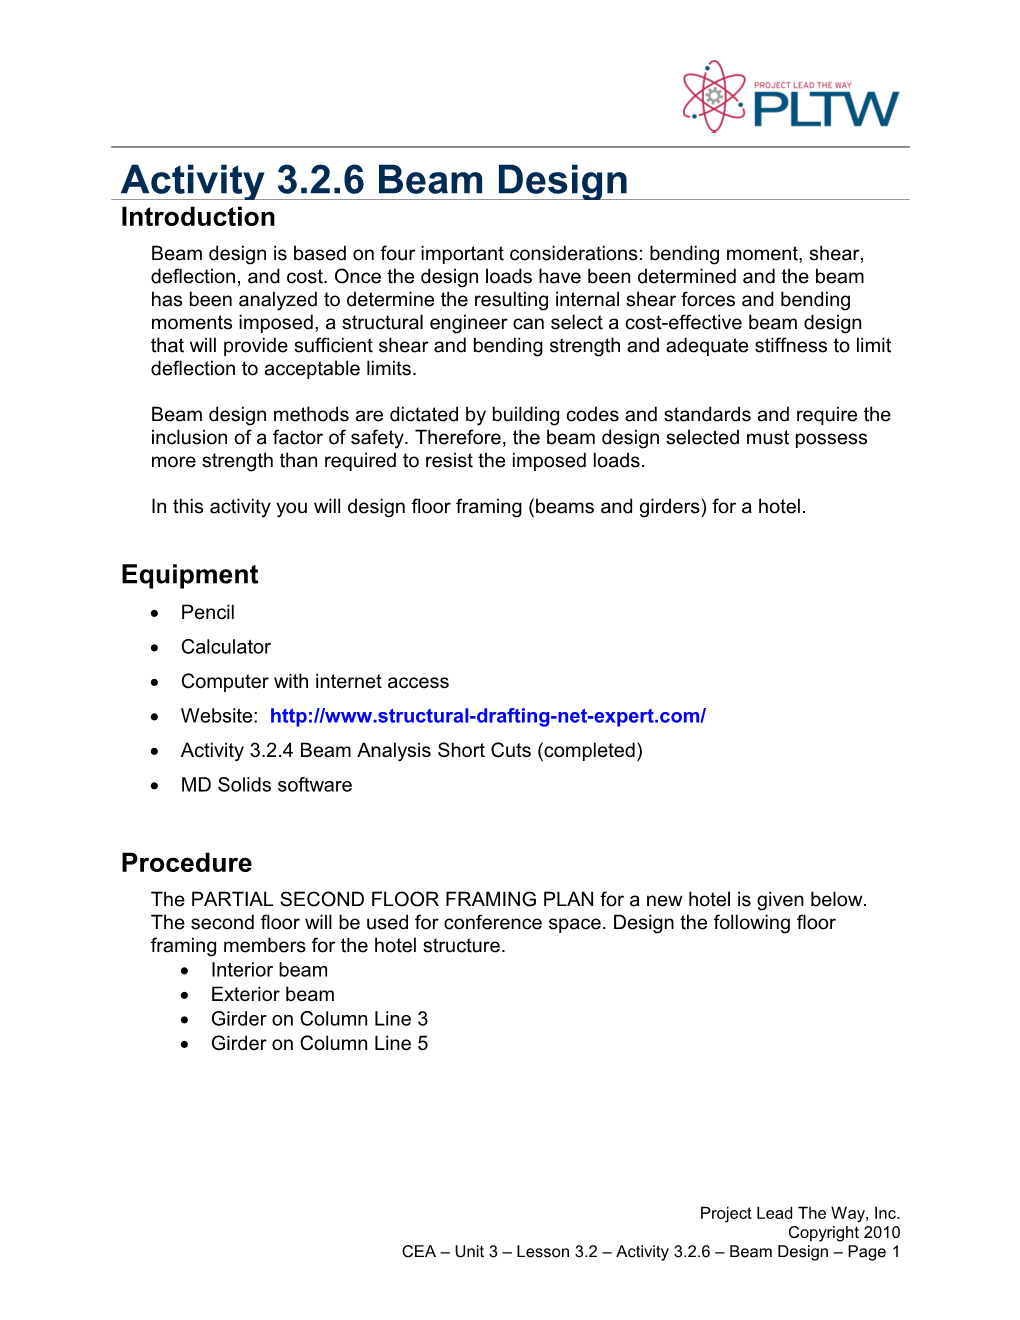 Activity 3.2.6 - Beam Design